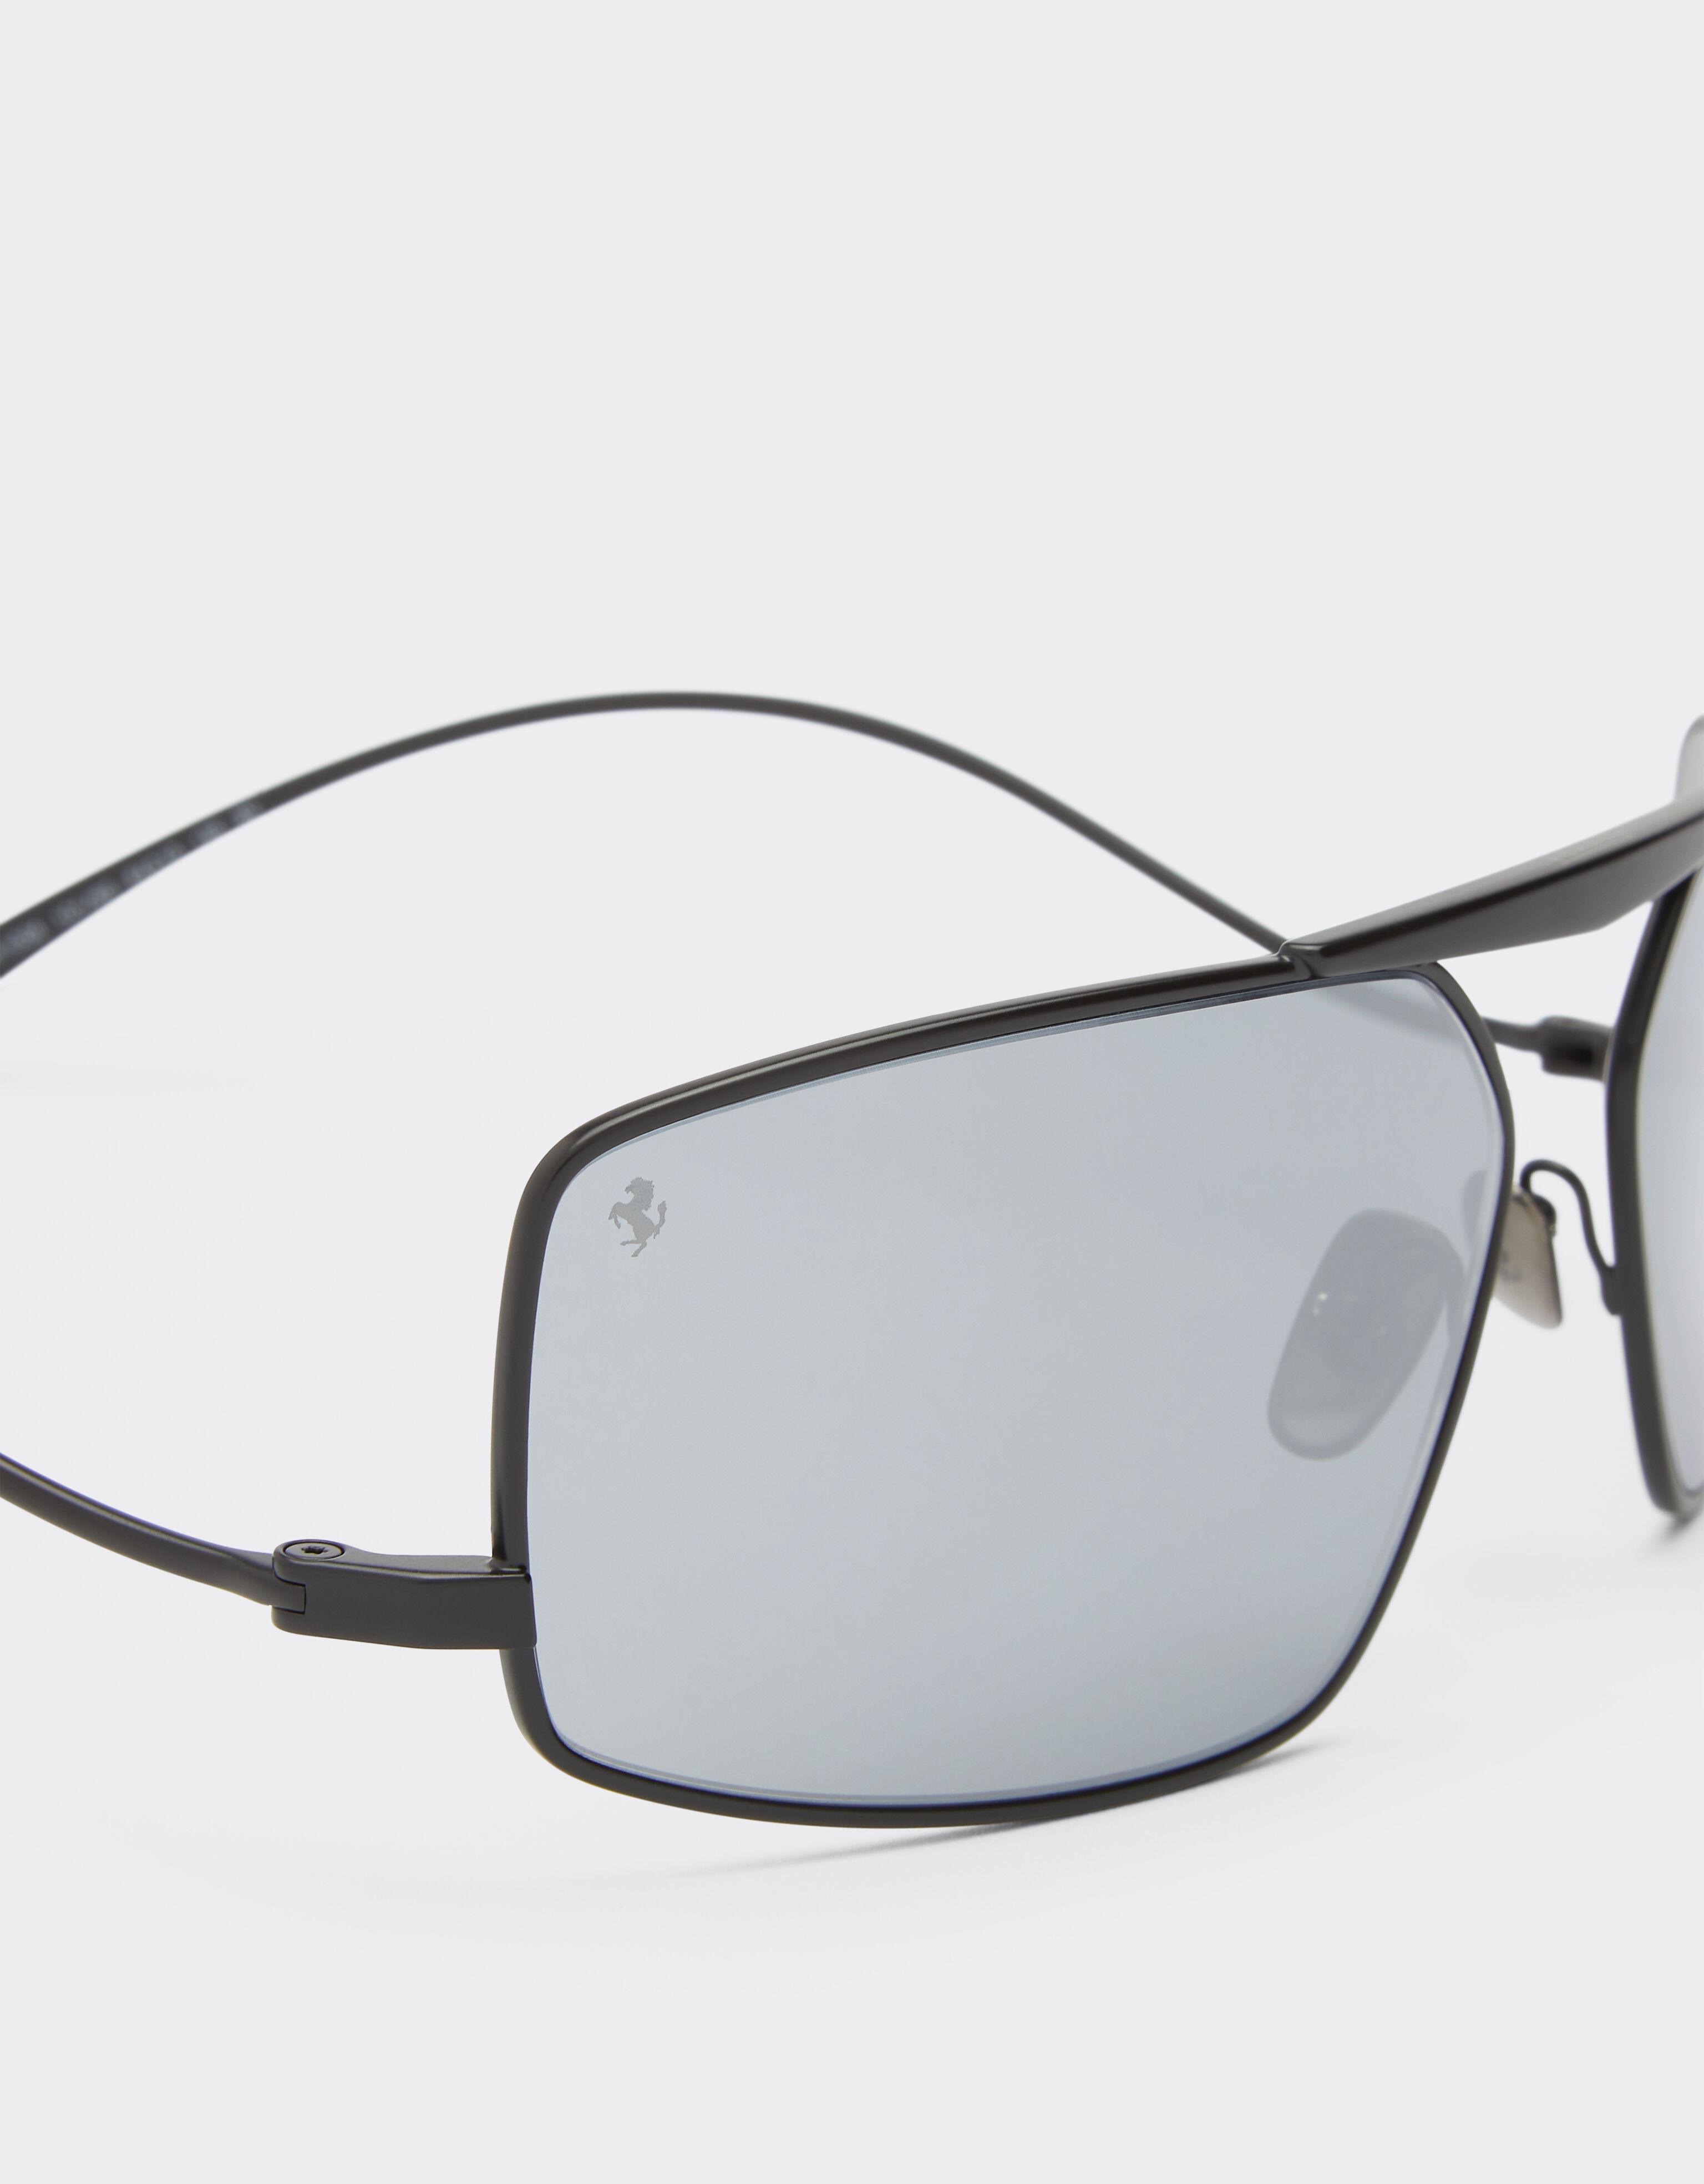 Ferrari Ferrari sunglasses in black metal with silver mirror lenses Black Matt F1210f